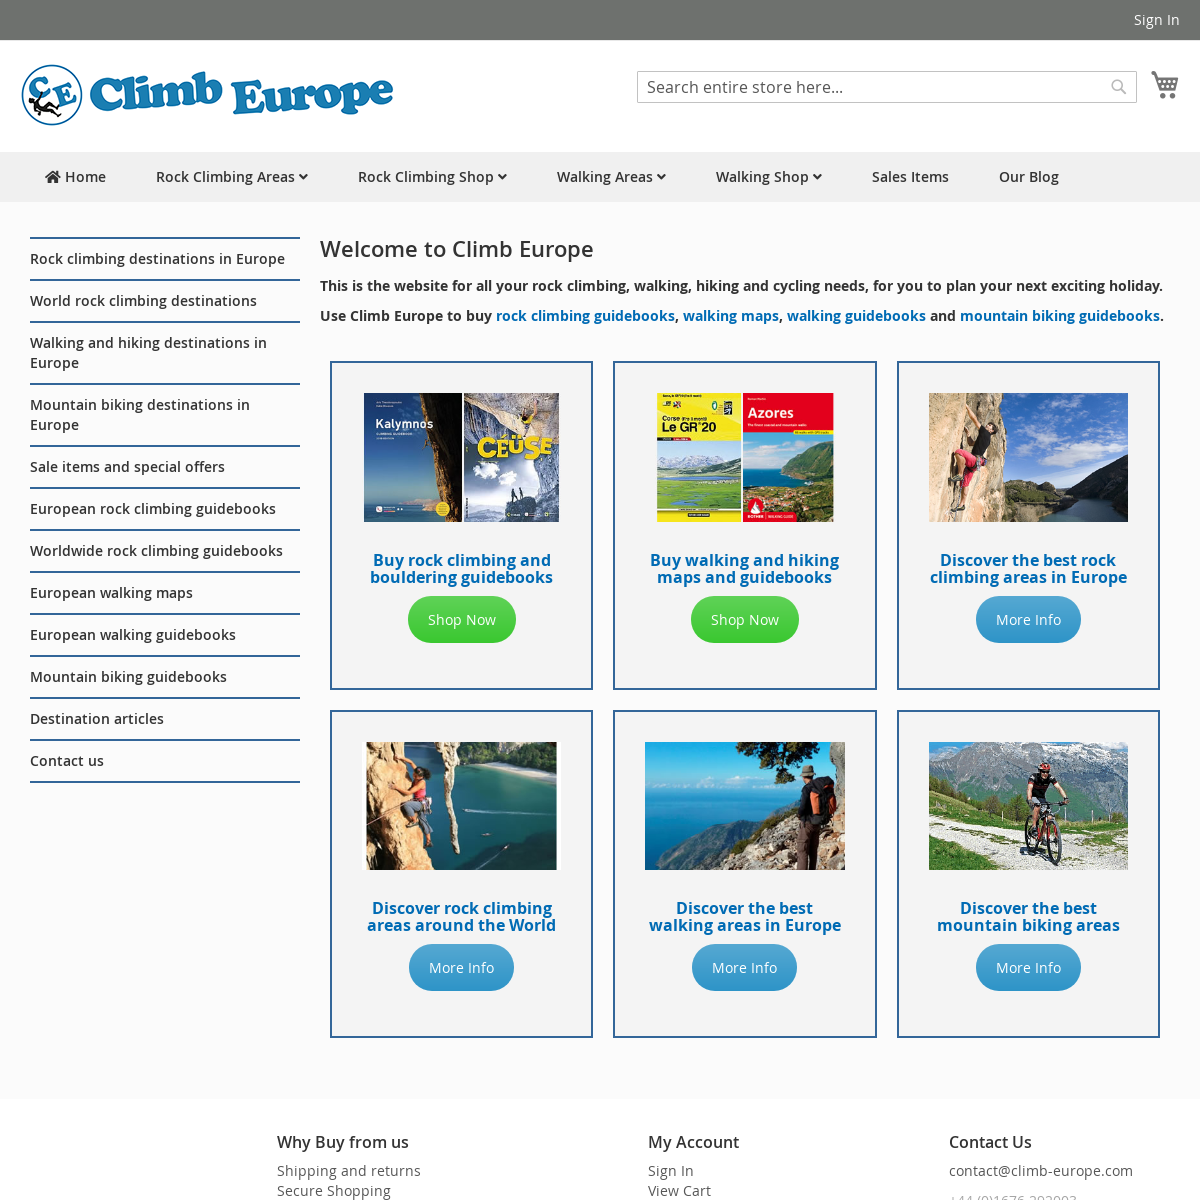 A complete backup of climb-europe.com